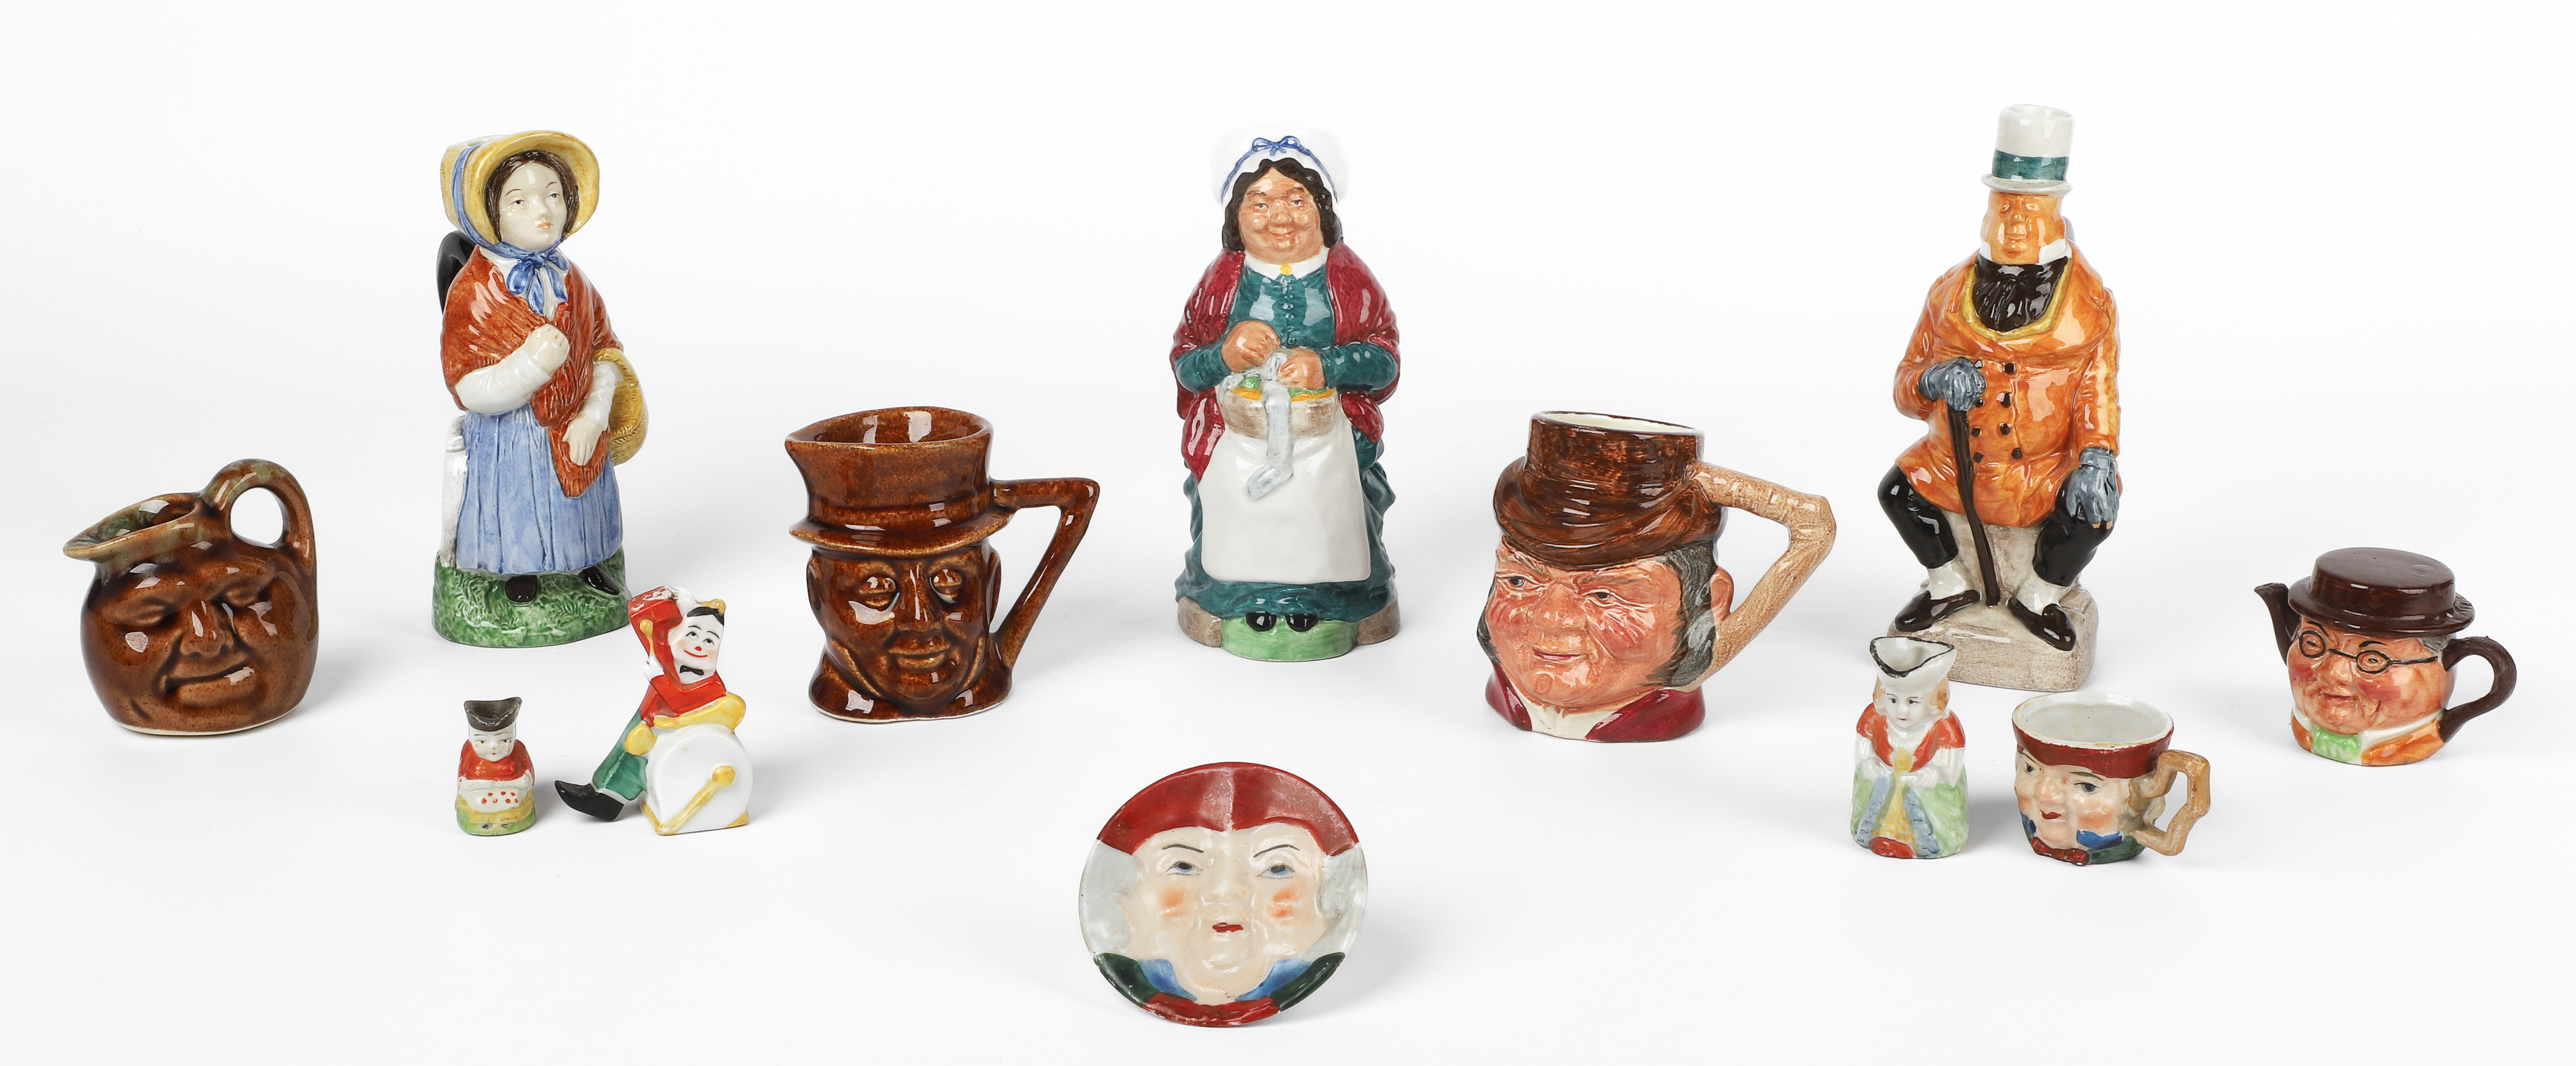  12 Porcelain figural items including 2e23bd